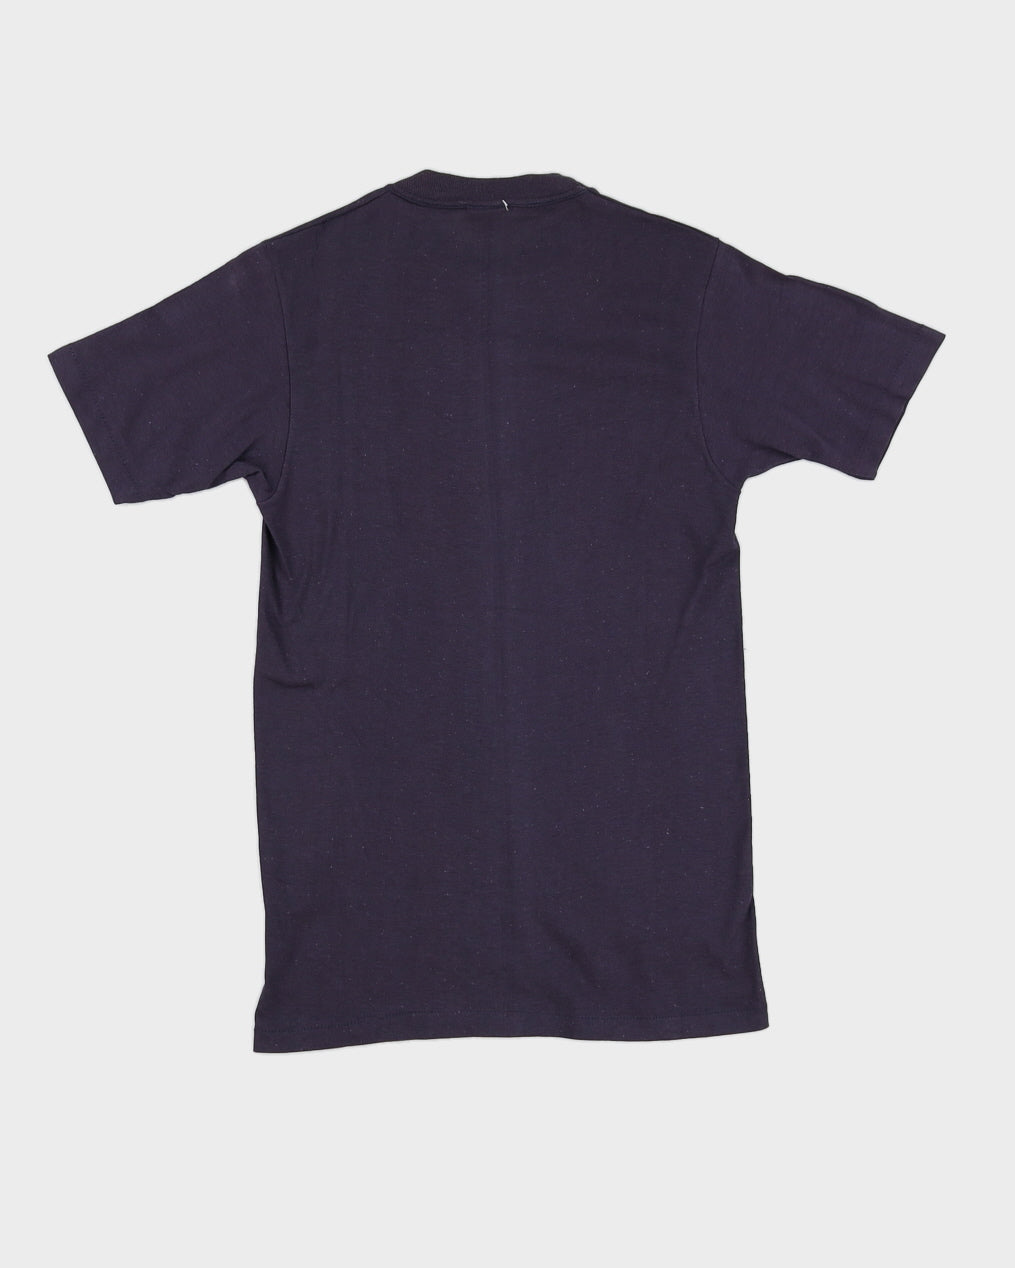 Vintage 70s Wrangler Blue Navy Single Stitch T-Shirt - S